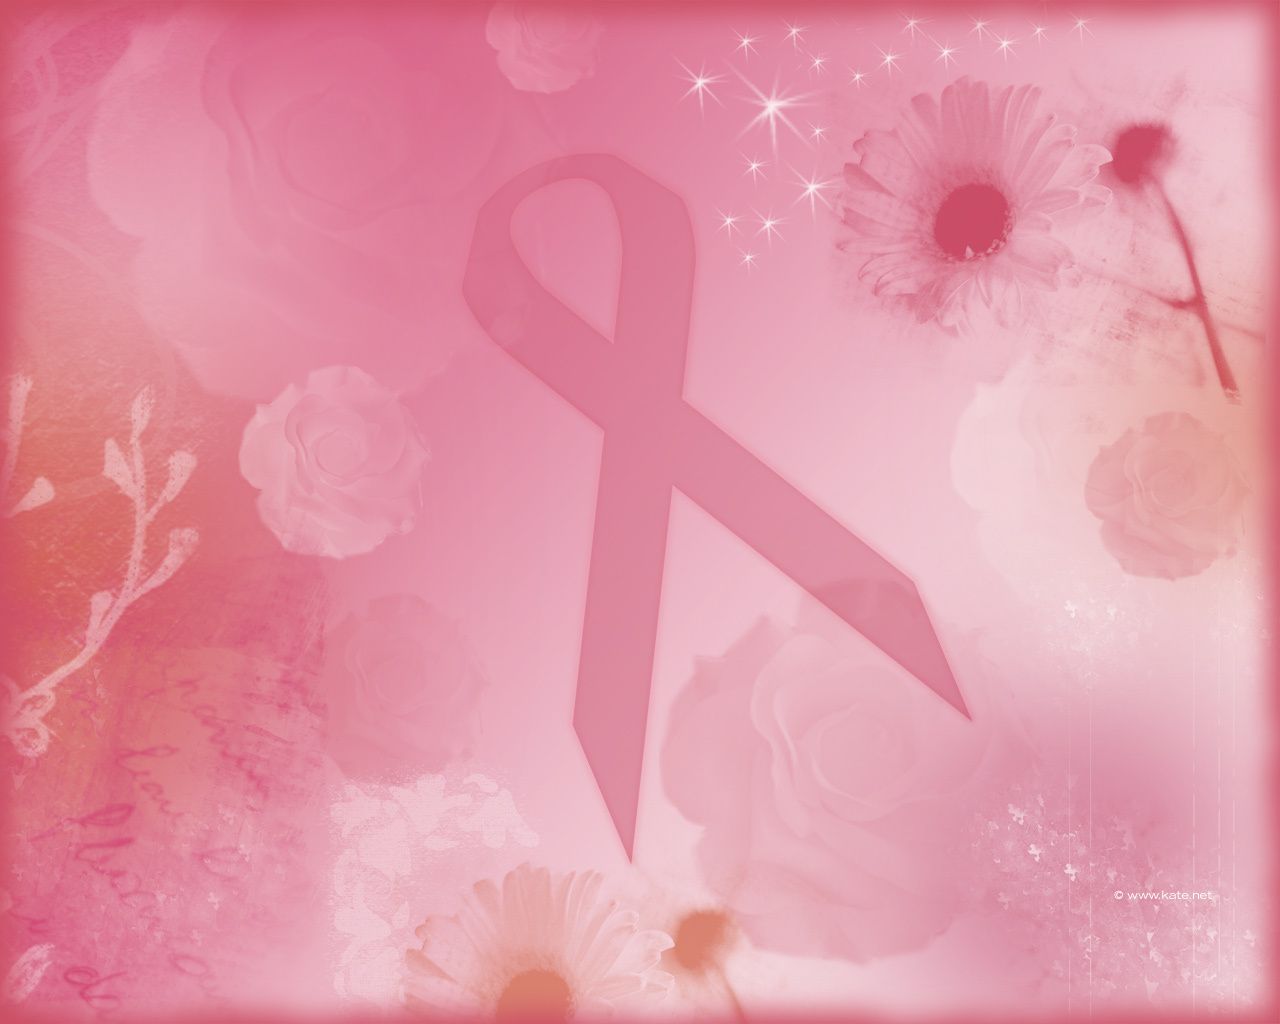 breast cancer - Breast Cancer Awareness Wallpaper (7987041) - Fanpop